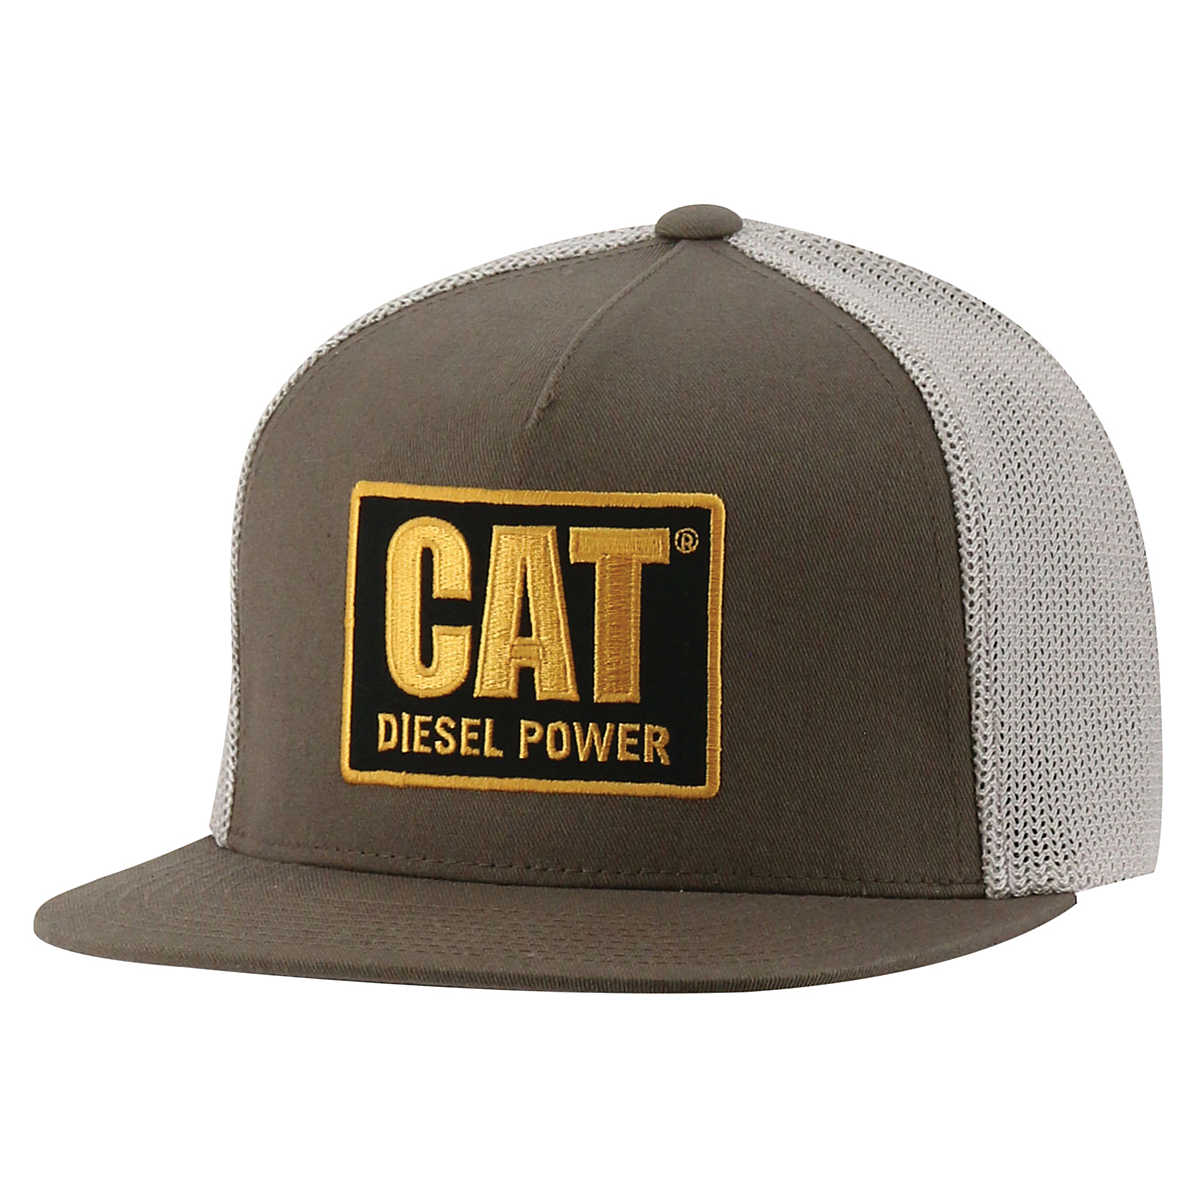 Diesel Power Flat Bill Cap, Dark Earth, dynamic 1